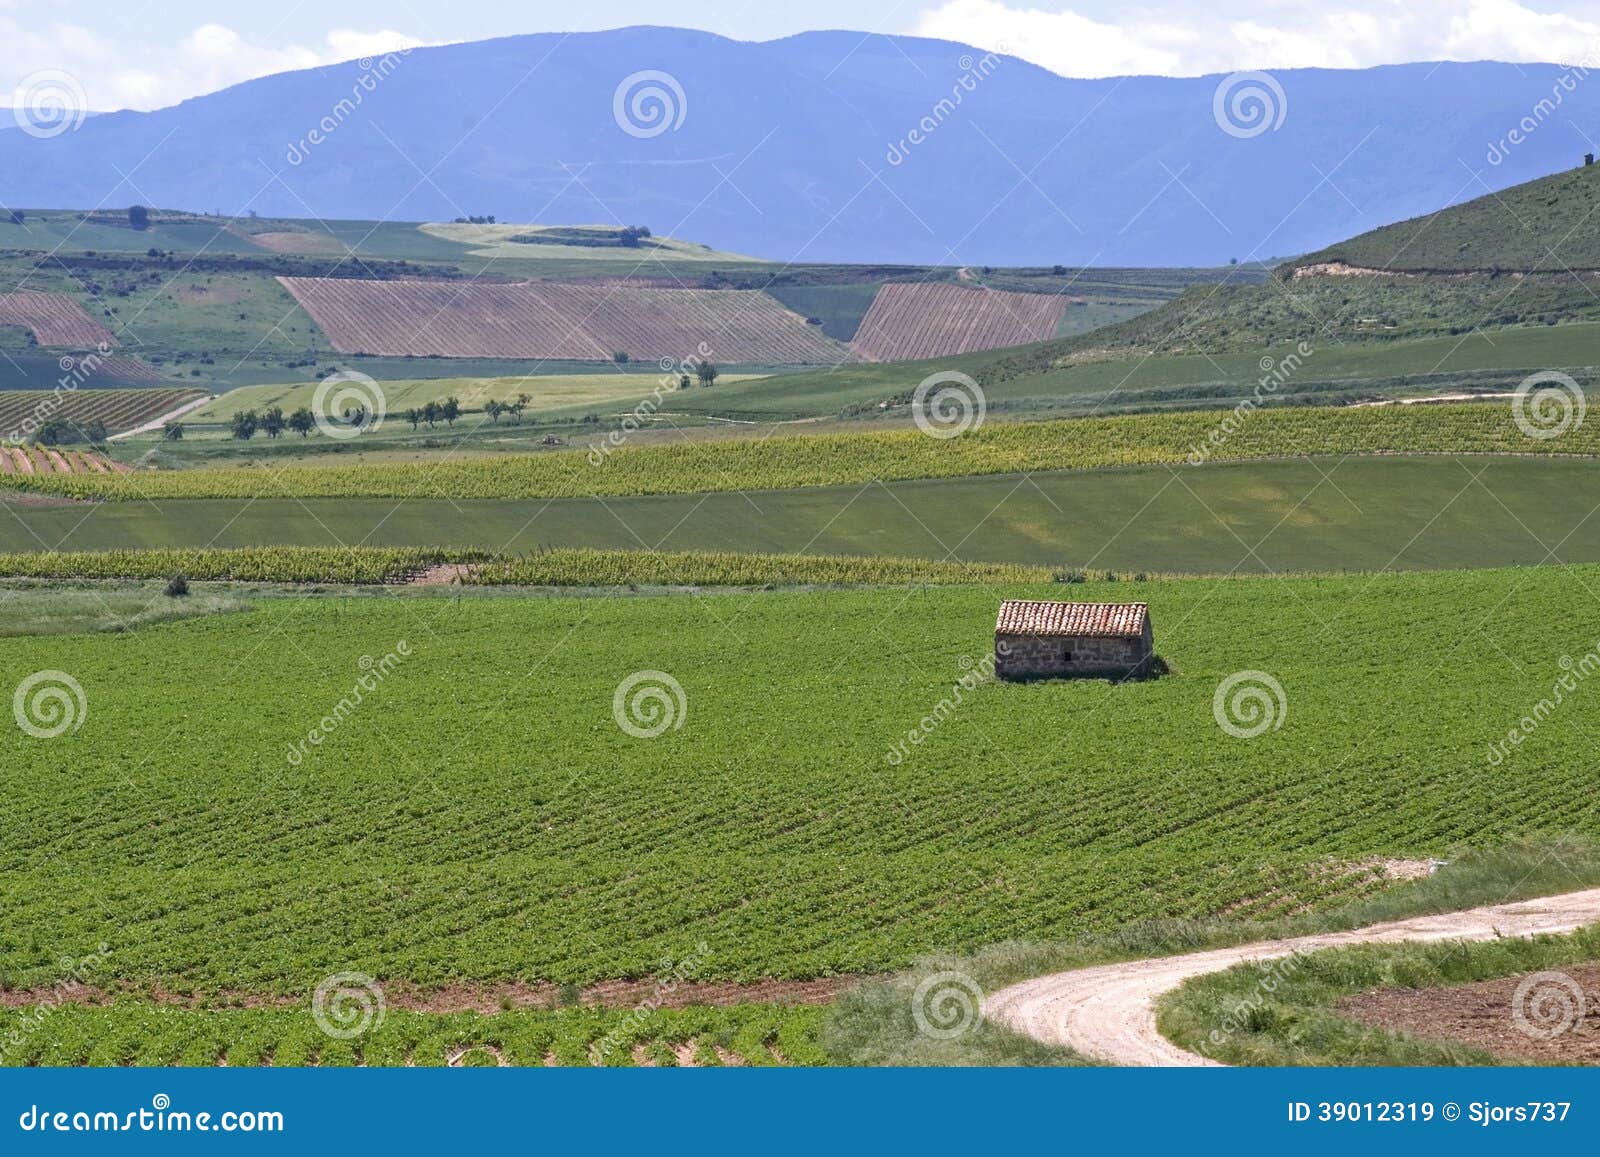 vineyards in the countryside of la rioja, spain